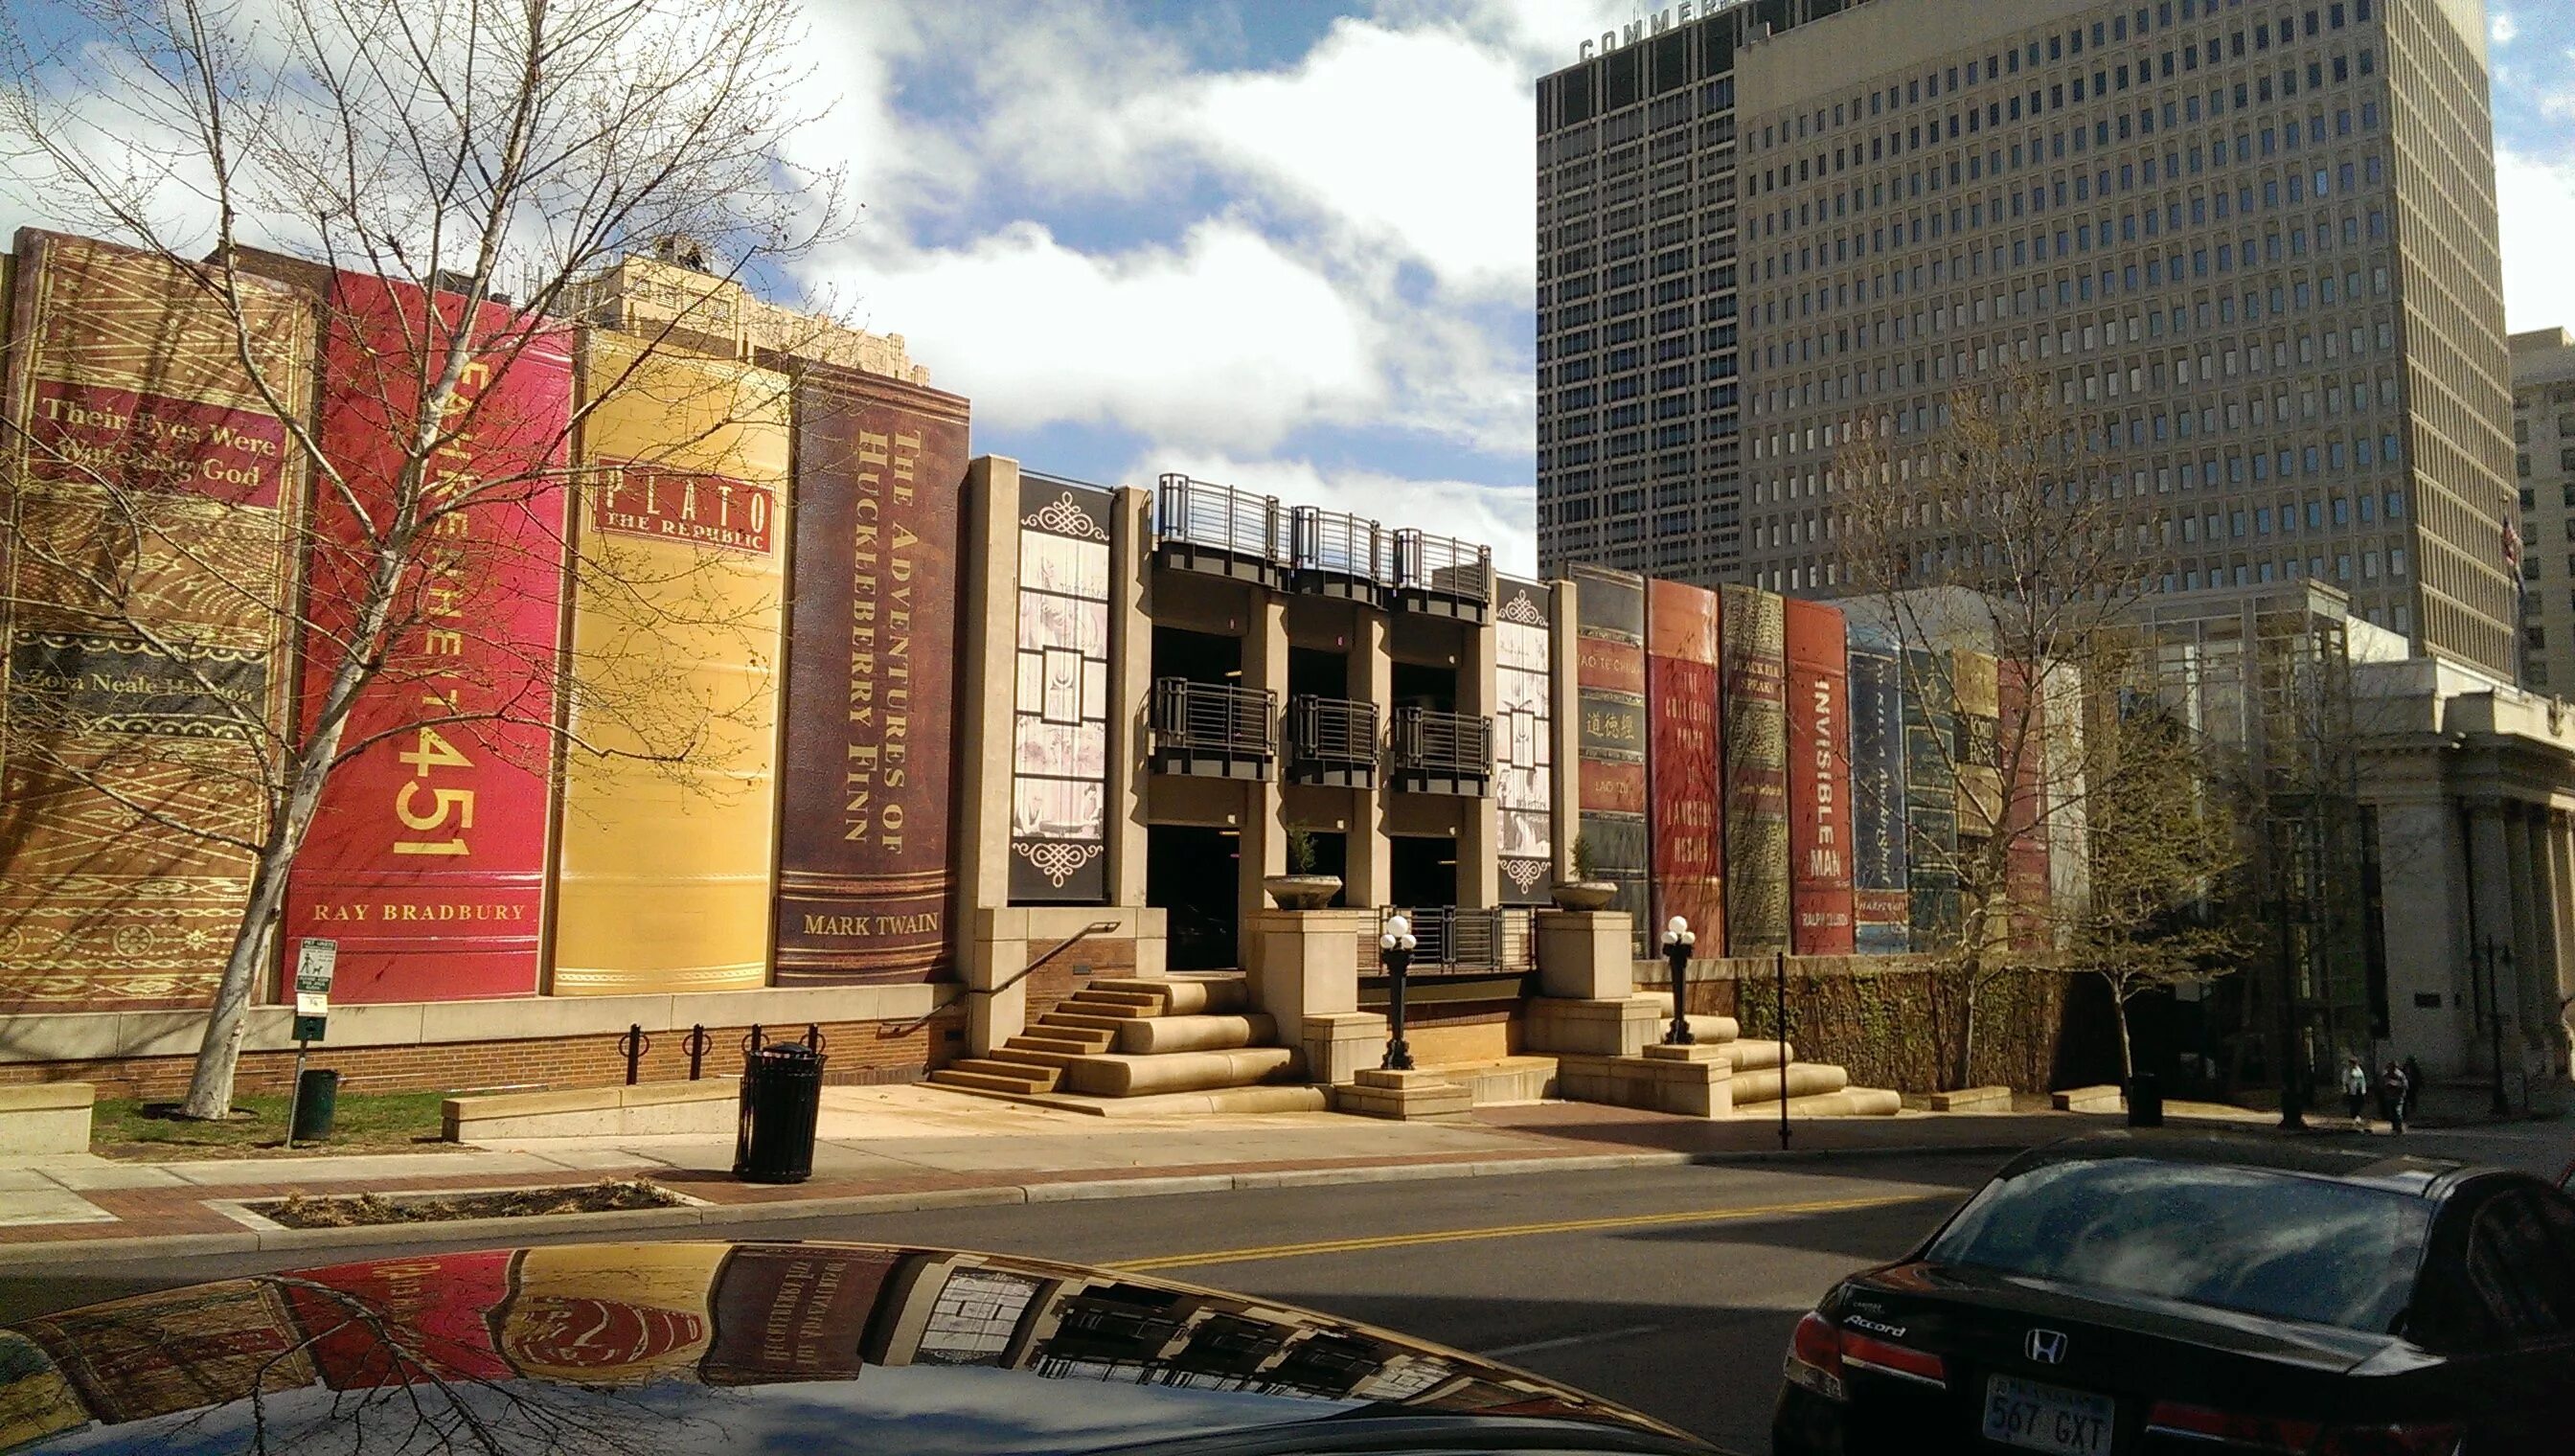 City library. Публичная библиотека Канзас-Сити, США. Библиотека в Канзас Сити в США. Центральная библиотека Канзас-Сити штат Миссури США. Публичная библиотека города Канзас (Kansas City public Library).